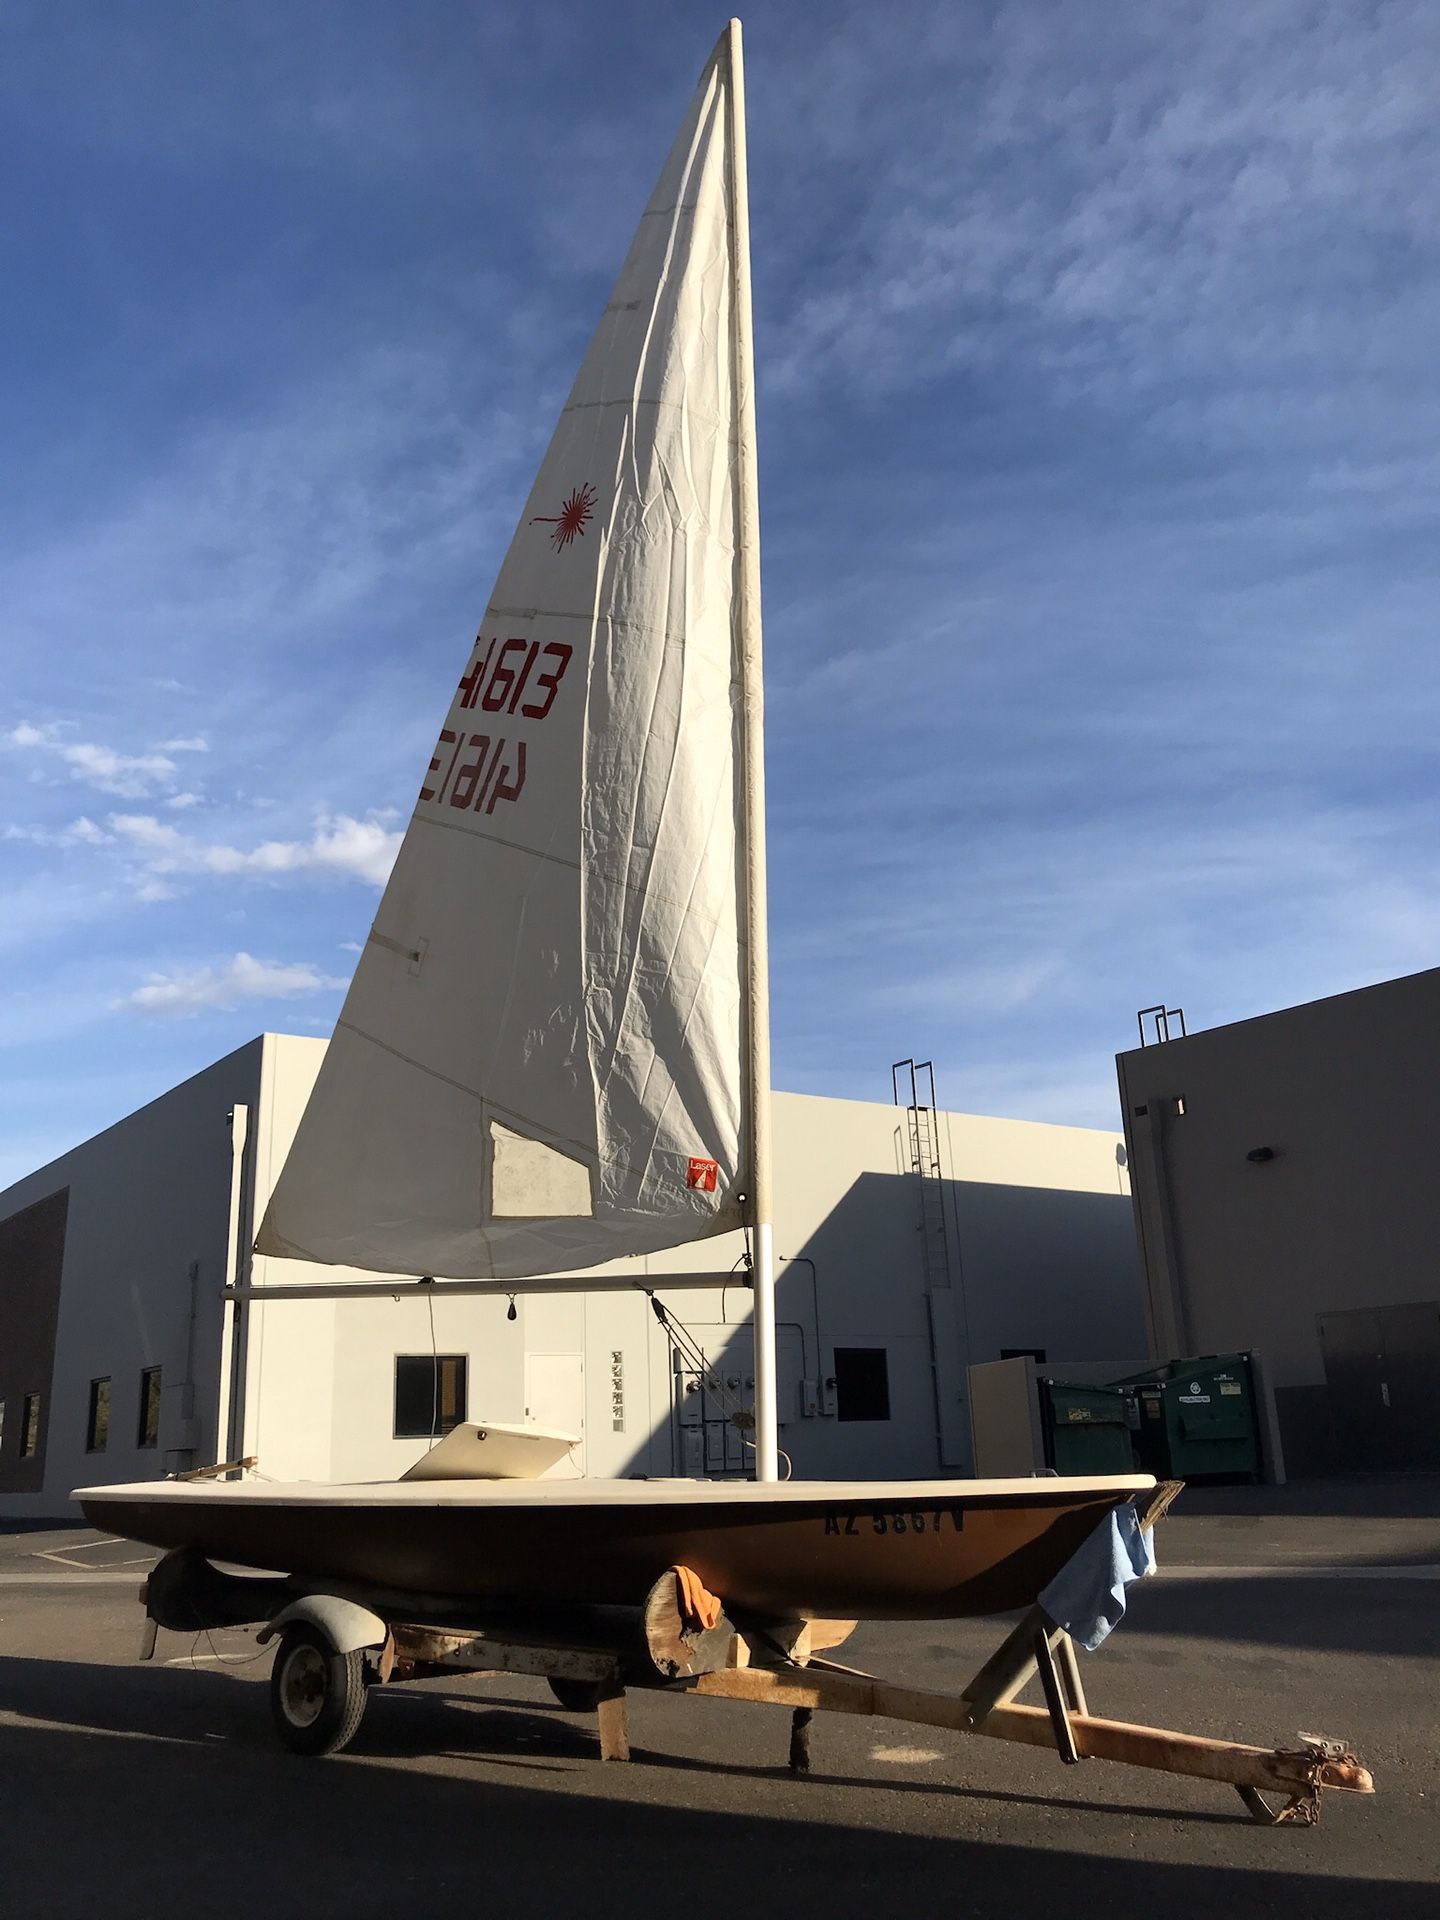 Laser sail boat